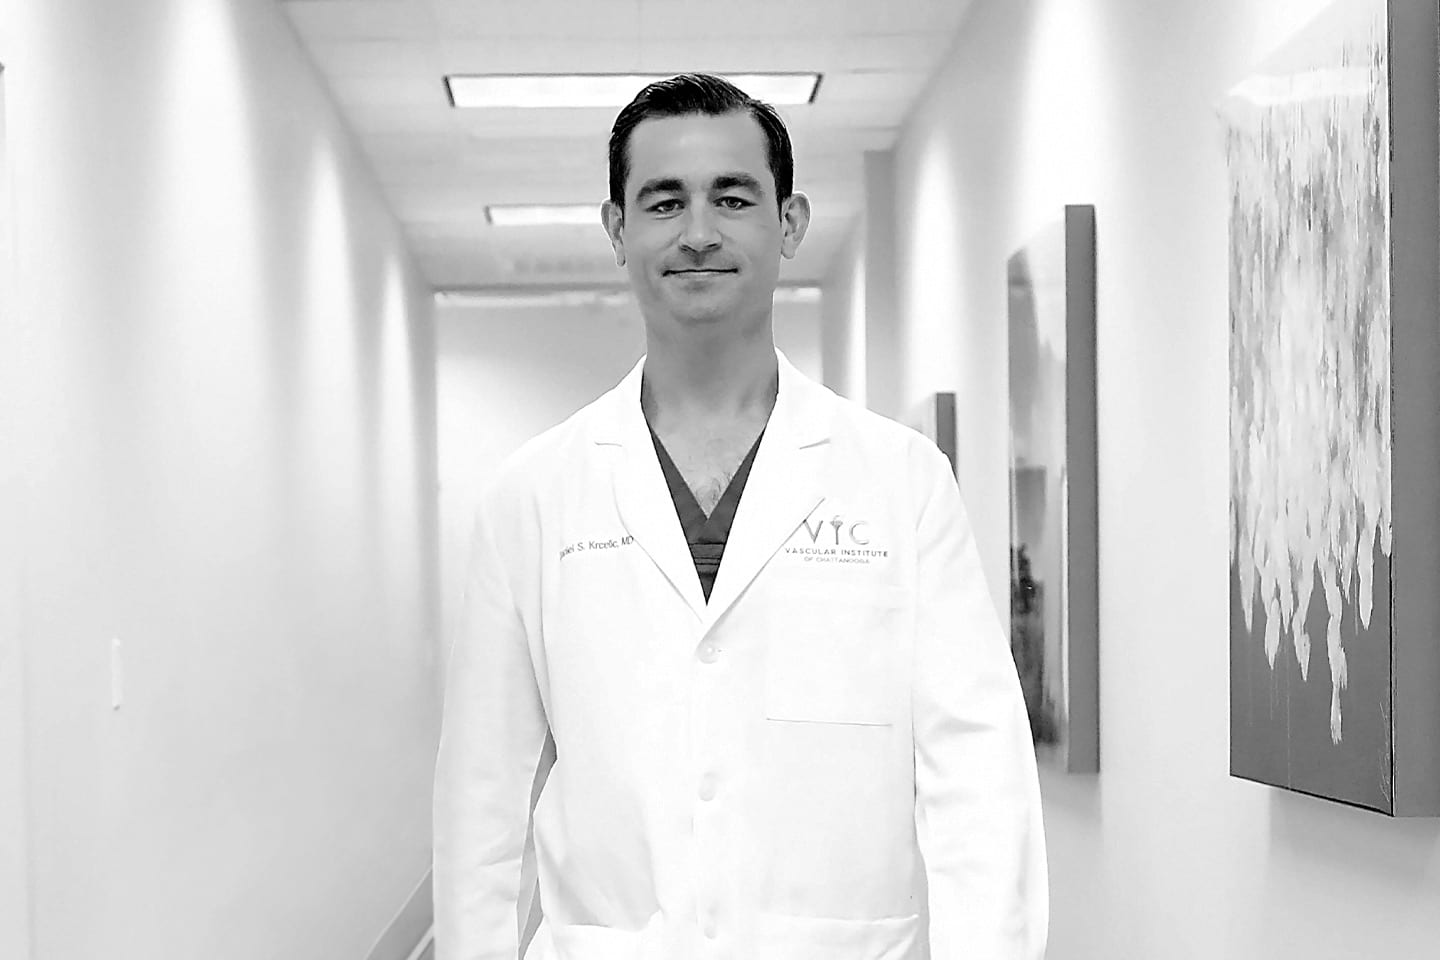 Dr. Daniel Krcelic at vascular institute of chattanooga